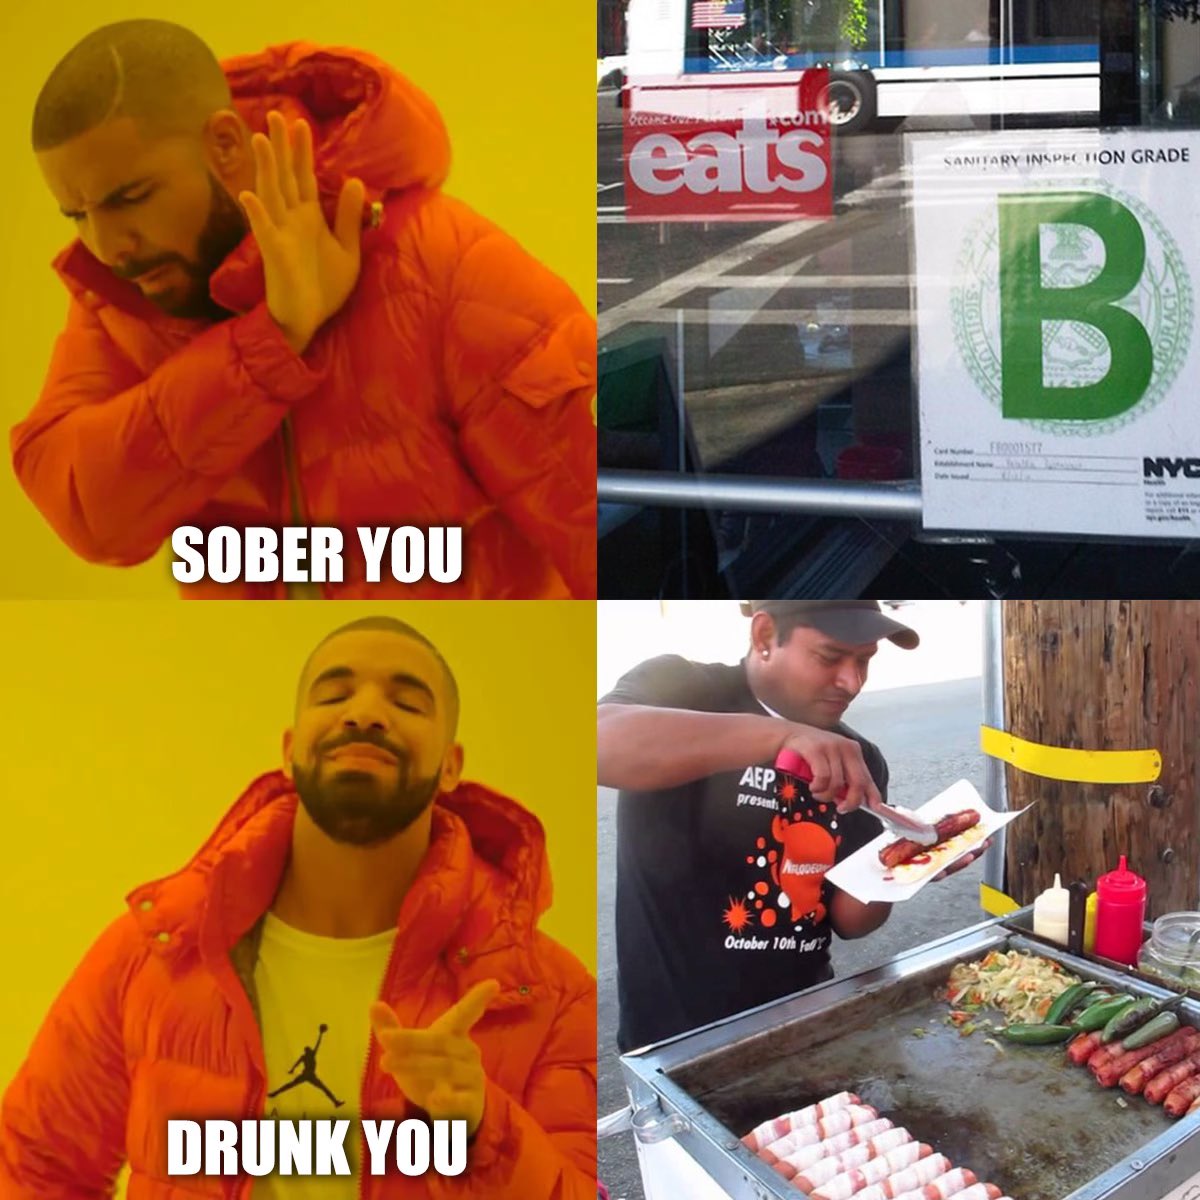 Sober you vs Drunk you